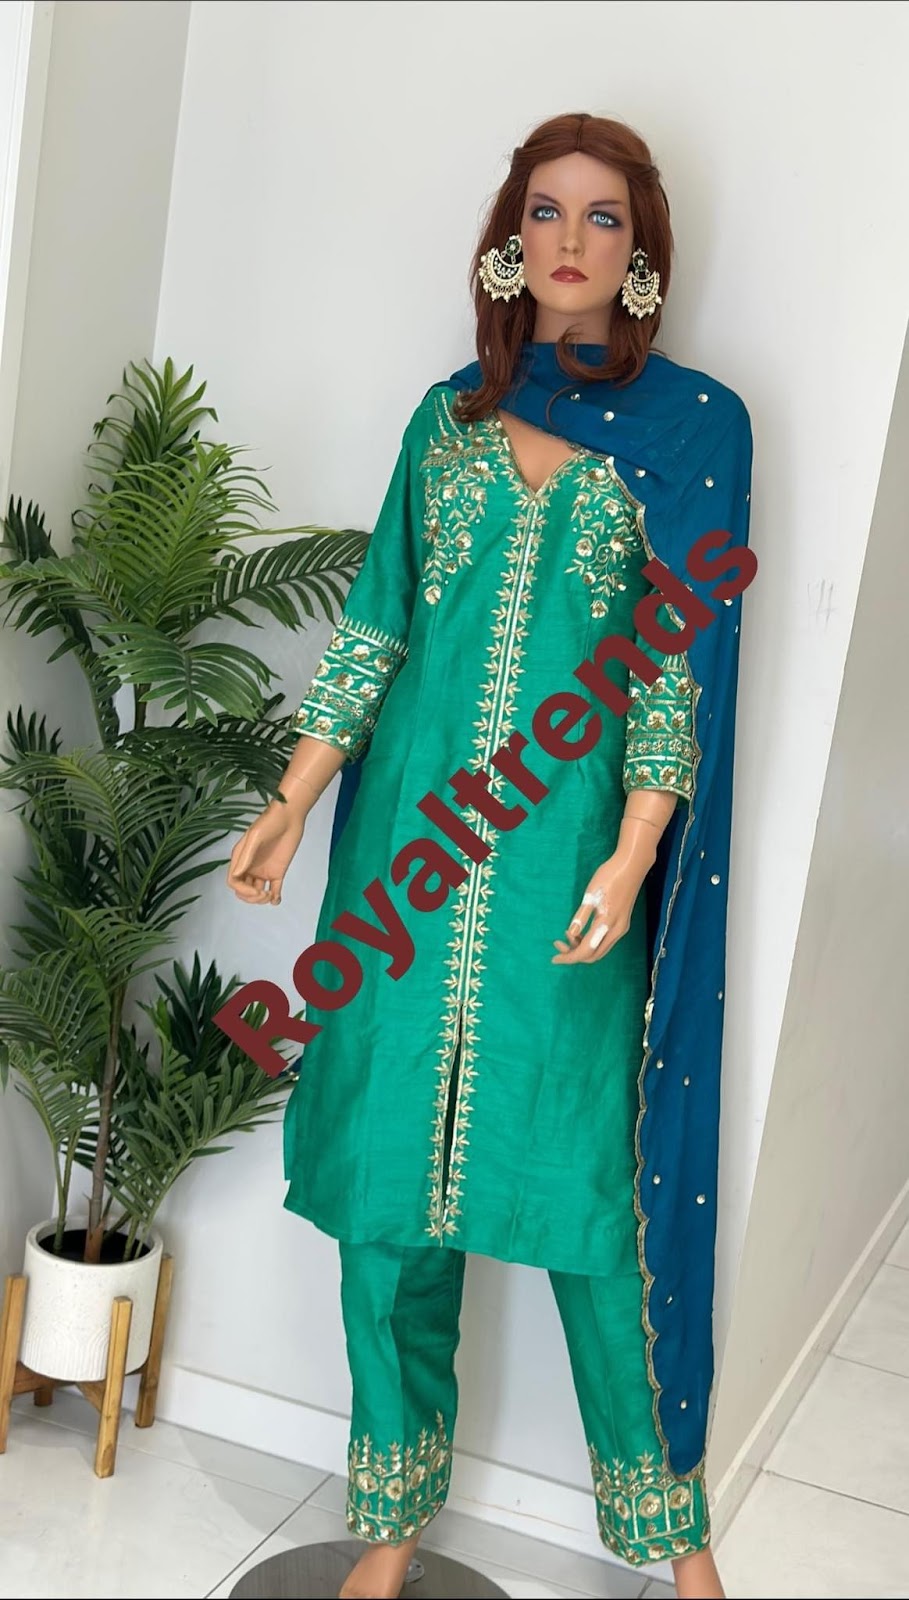 Royal Trends Best Punjabi Suits | clothing store | 56 Aldergrove Parade, Mickleham VIC 3064, Australia | 0430241611 OR +61 430 241 611